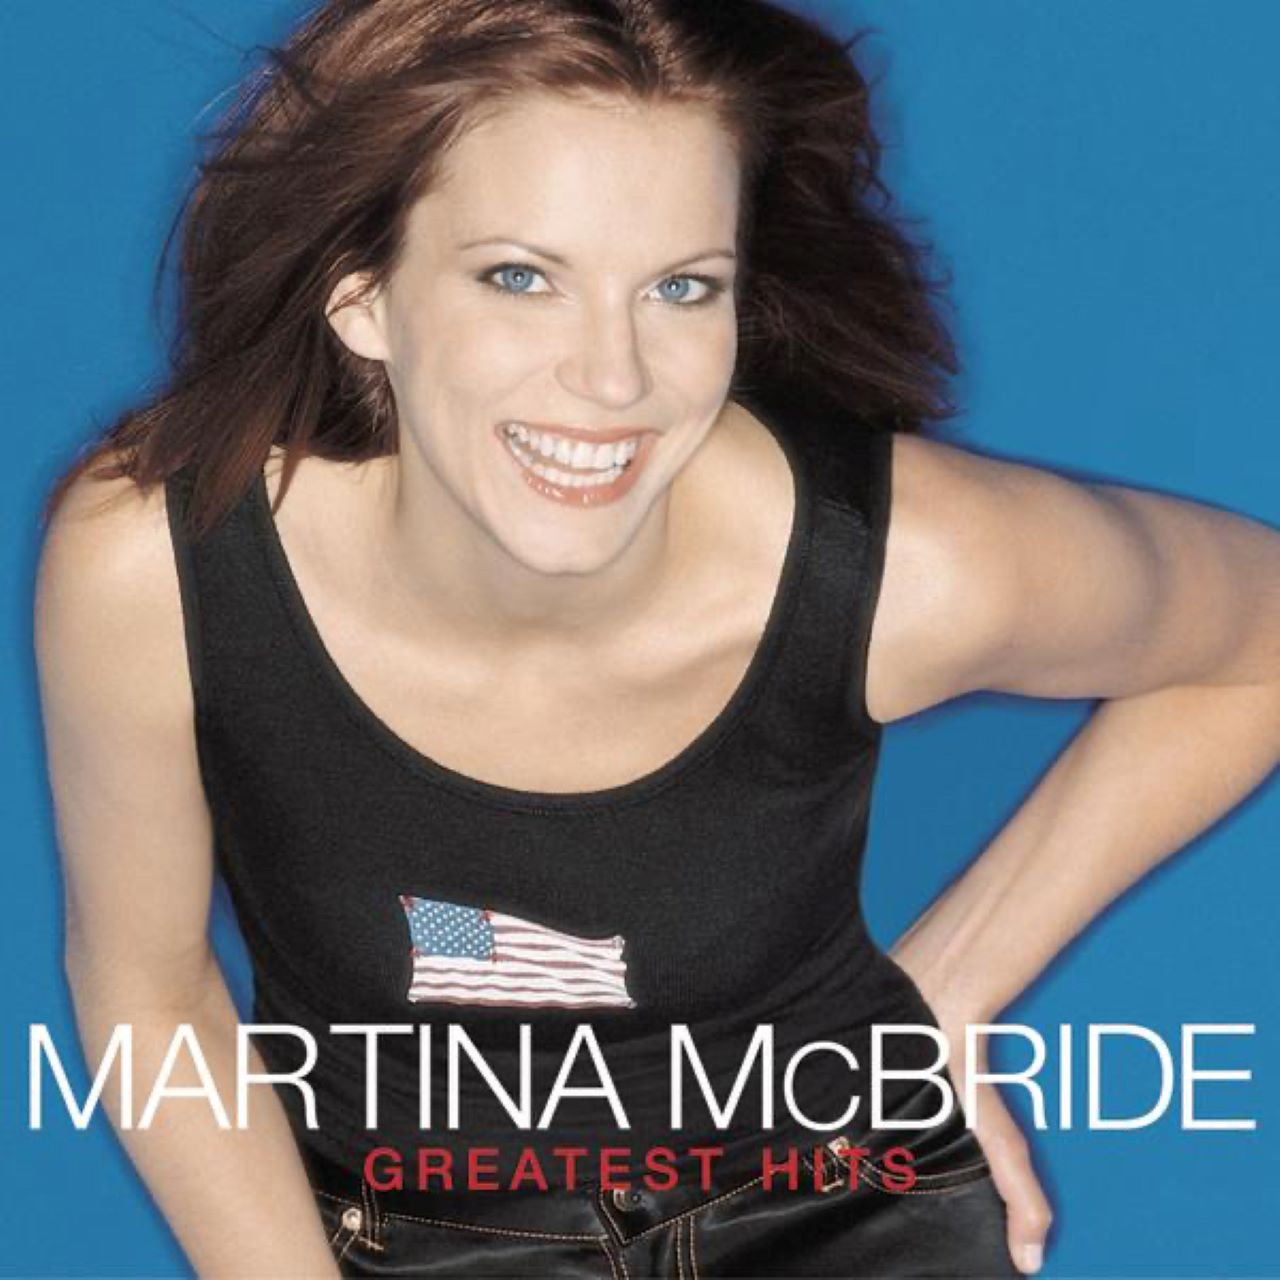 Martina McBride - Greatest Hits cover album